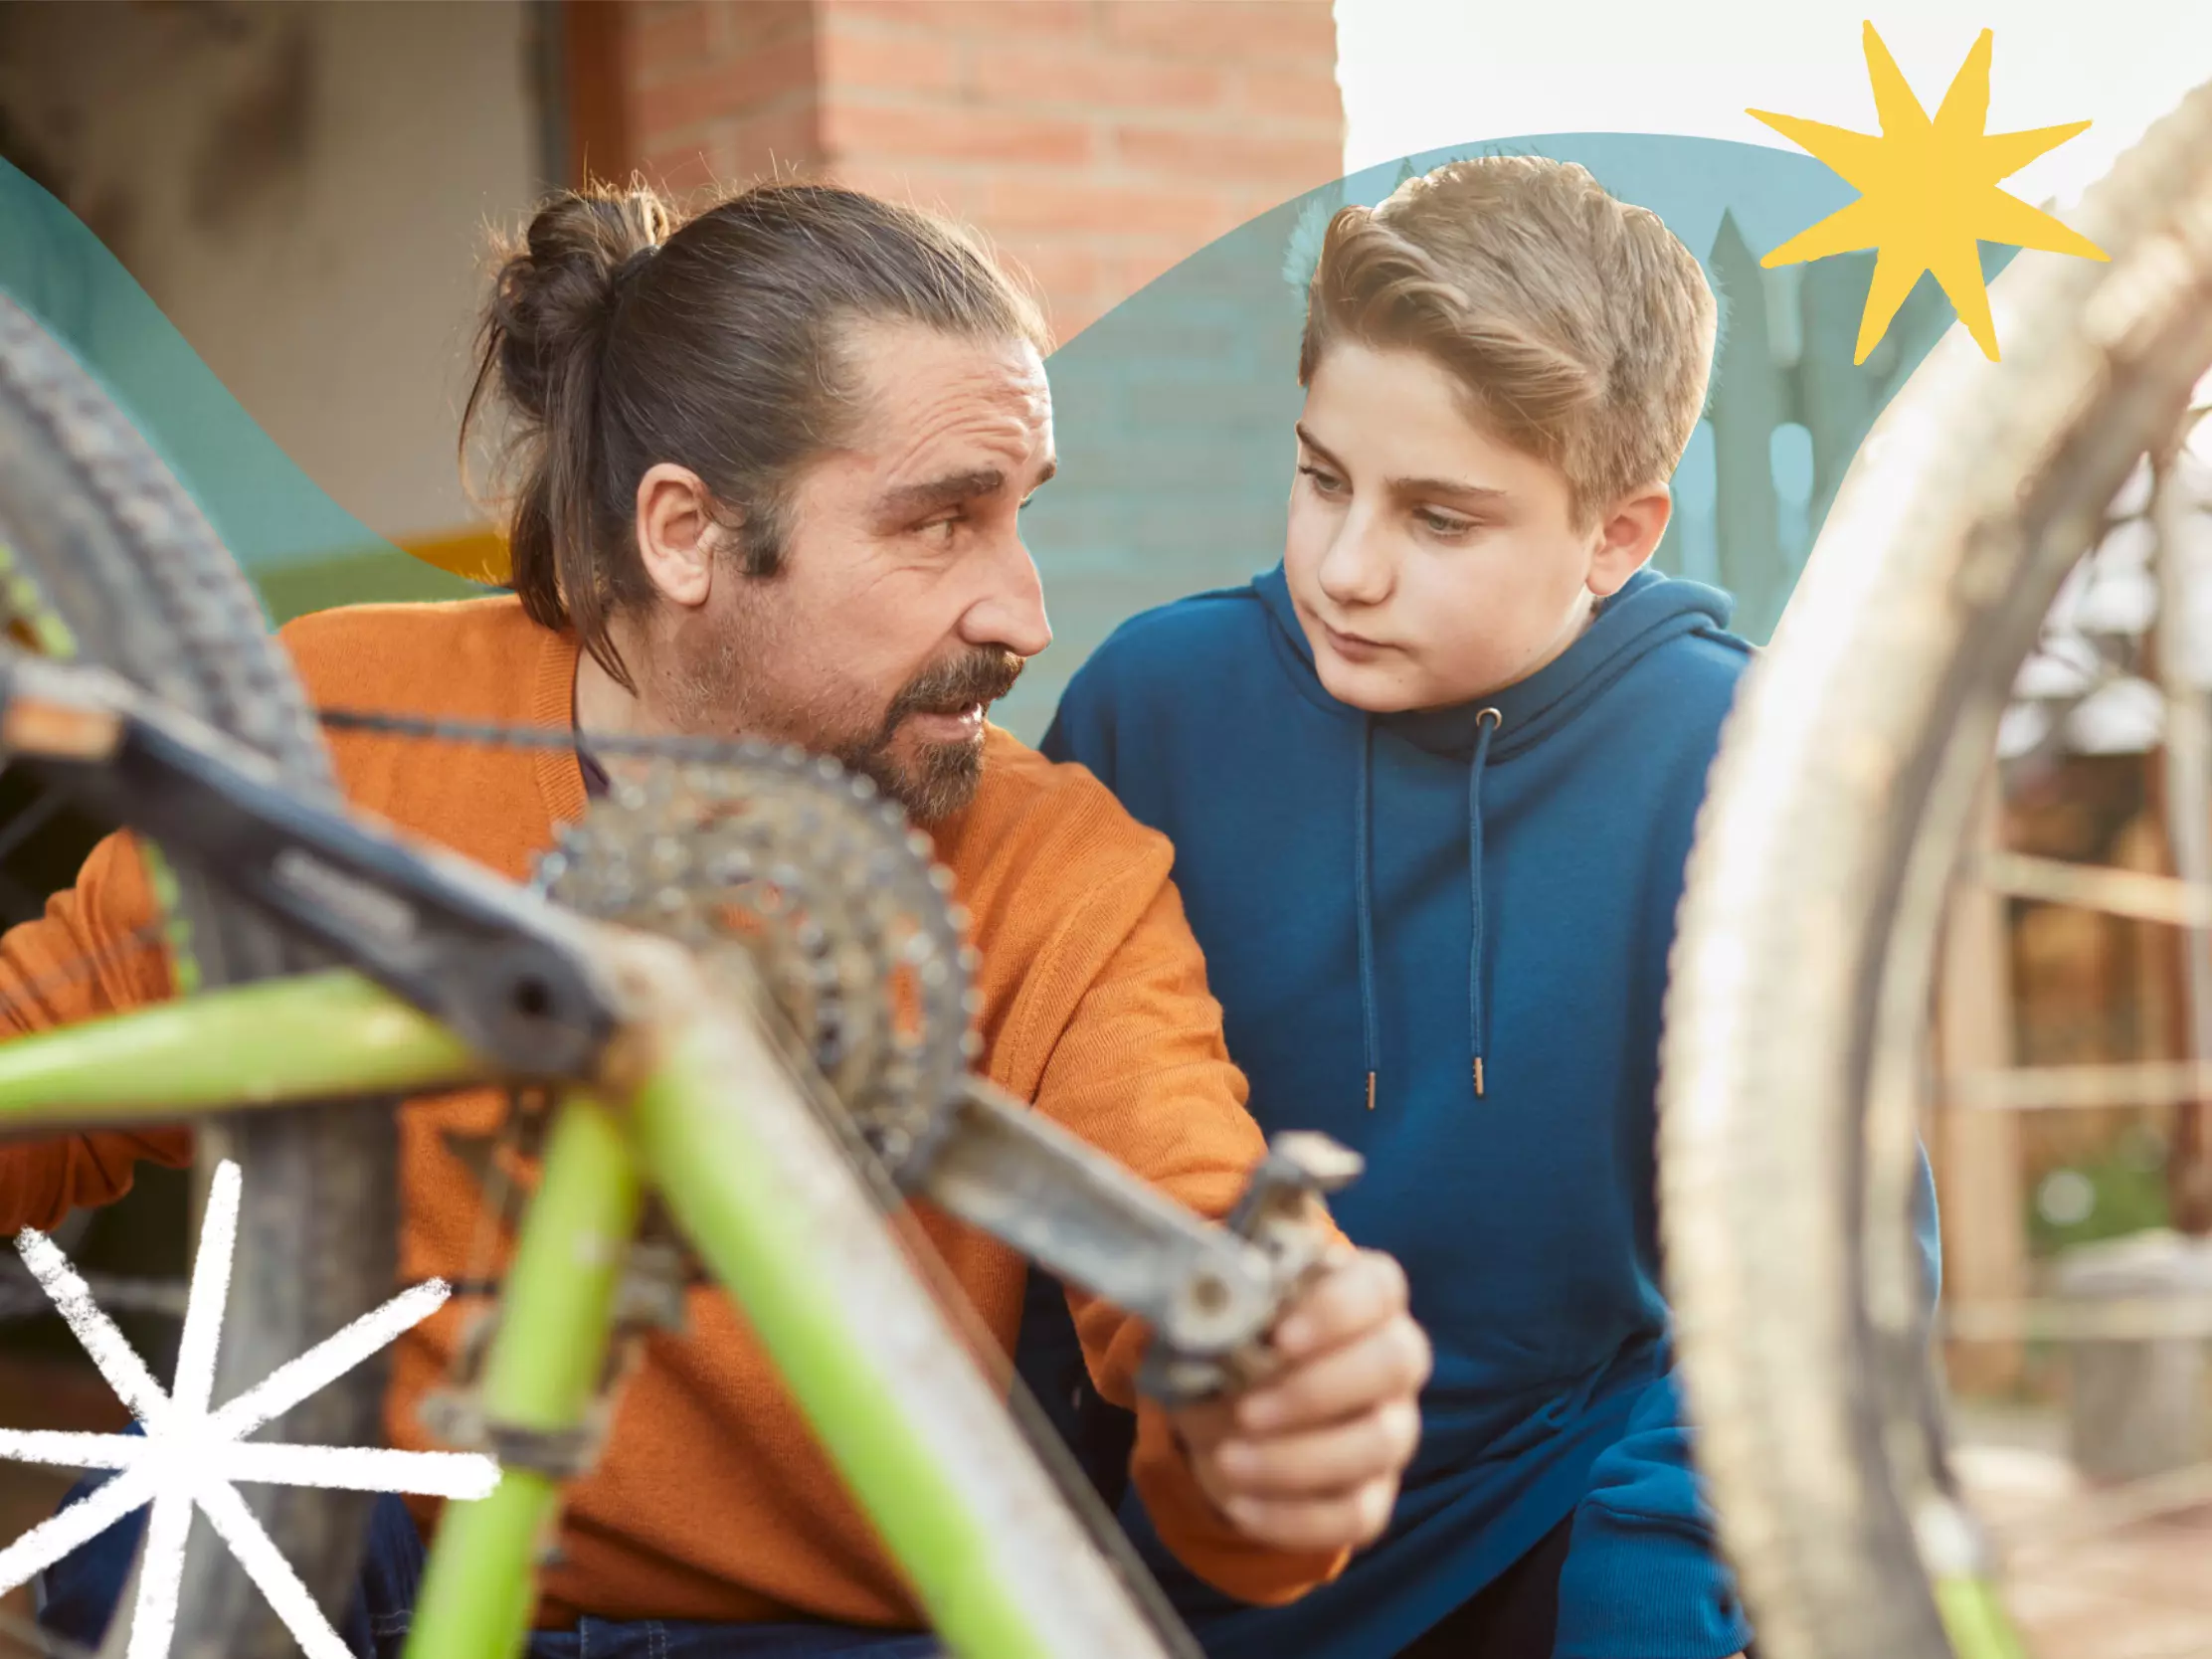 Dad looks toward his son as he teaches him how to fix a bike